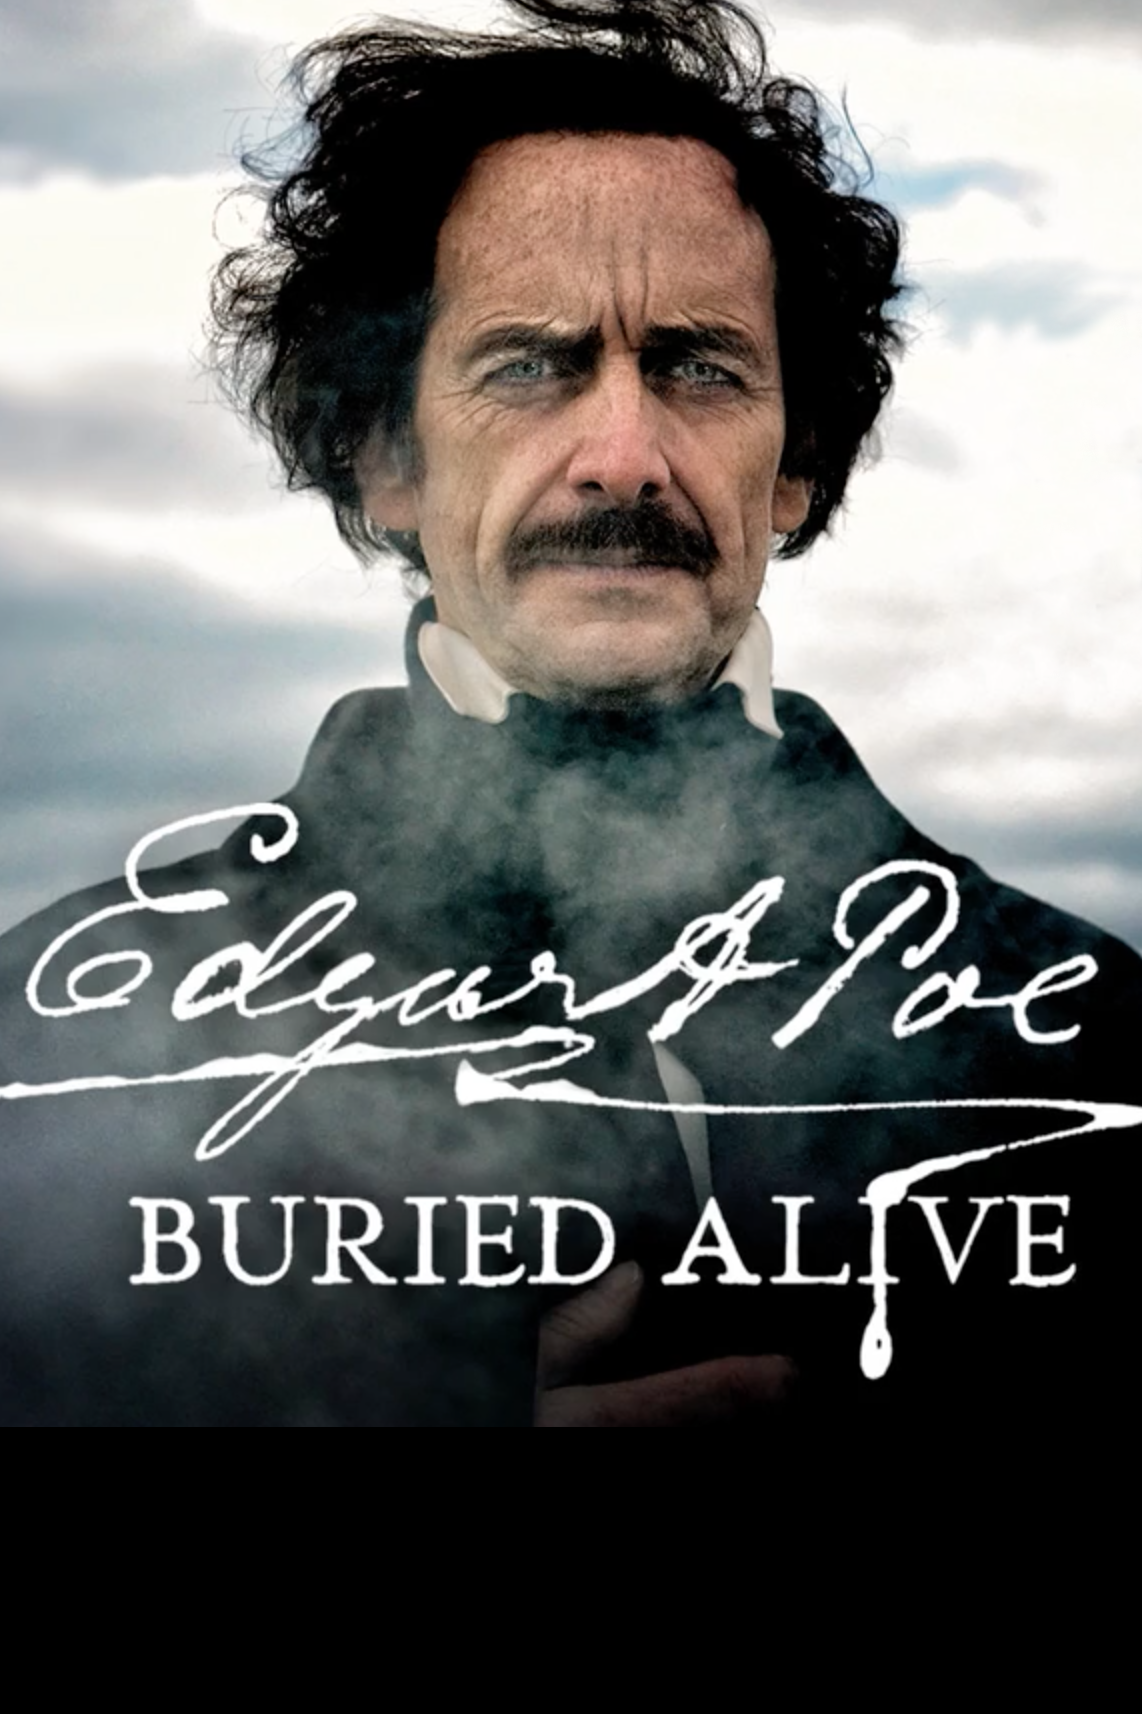 Edgar-Allan-Poe-Buried-Alive.png